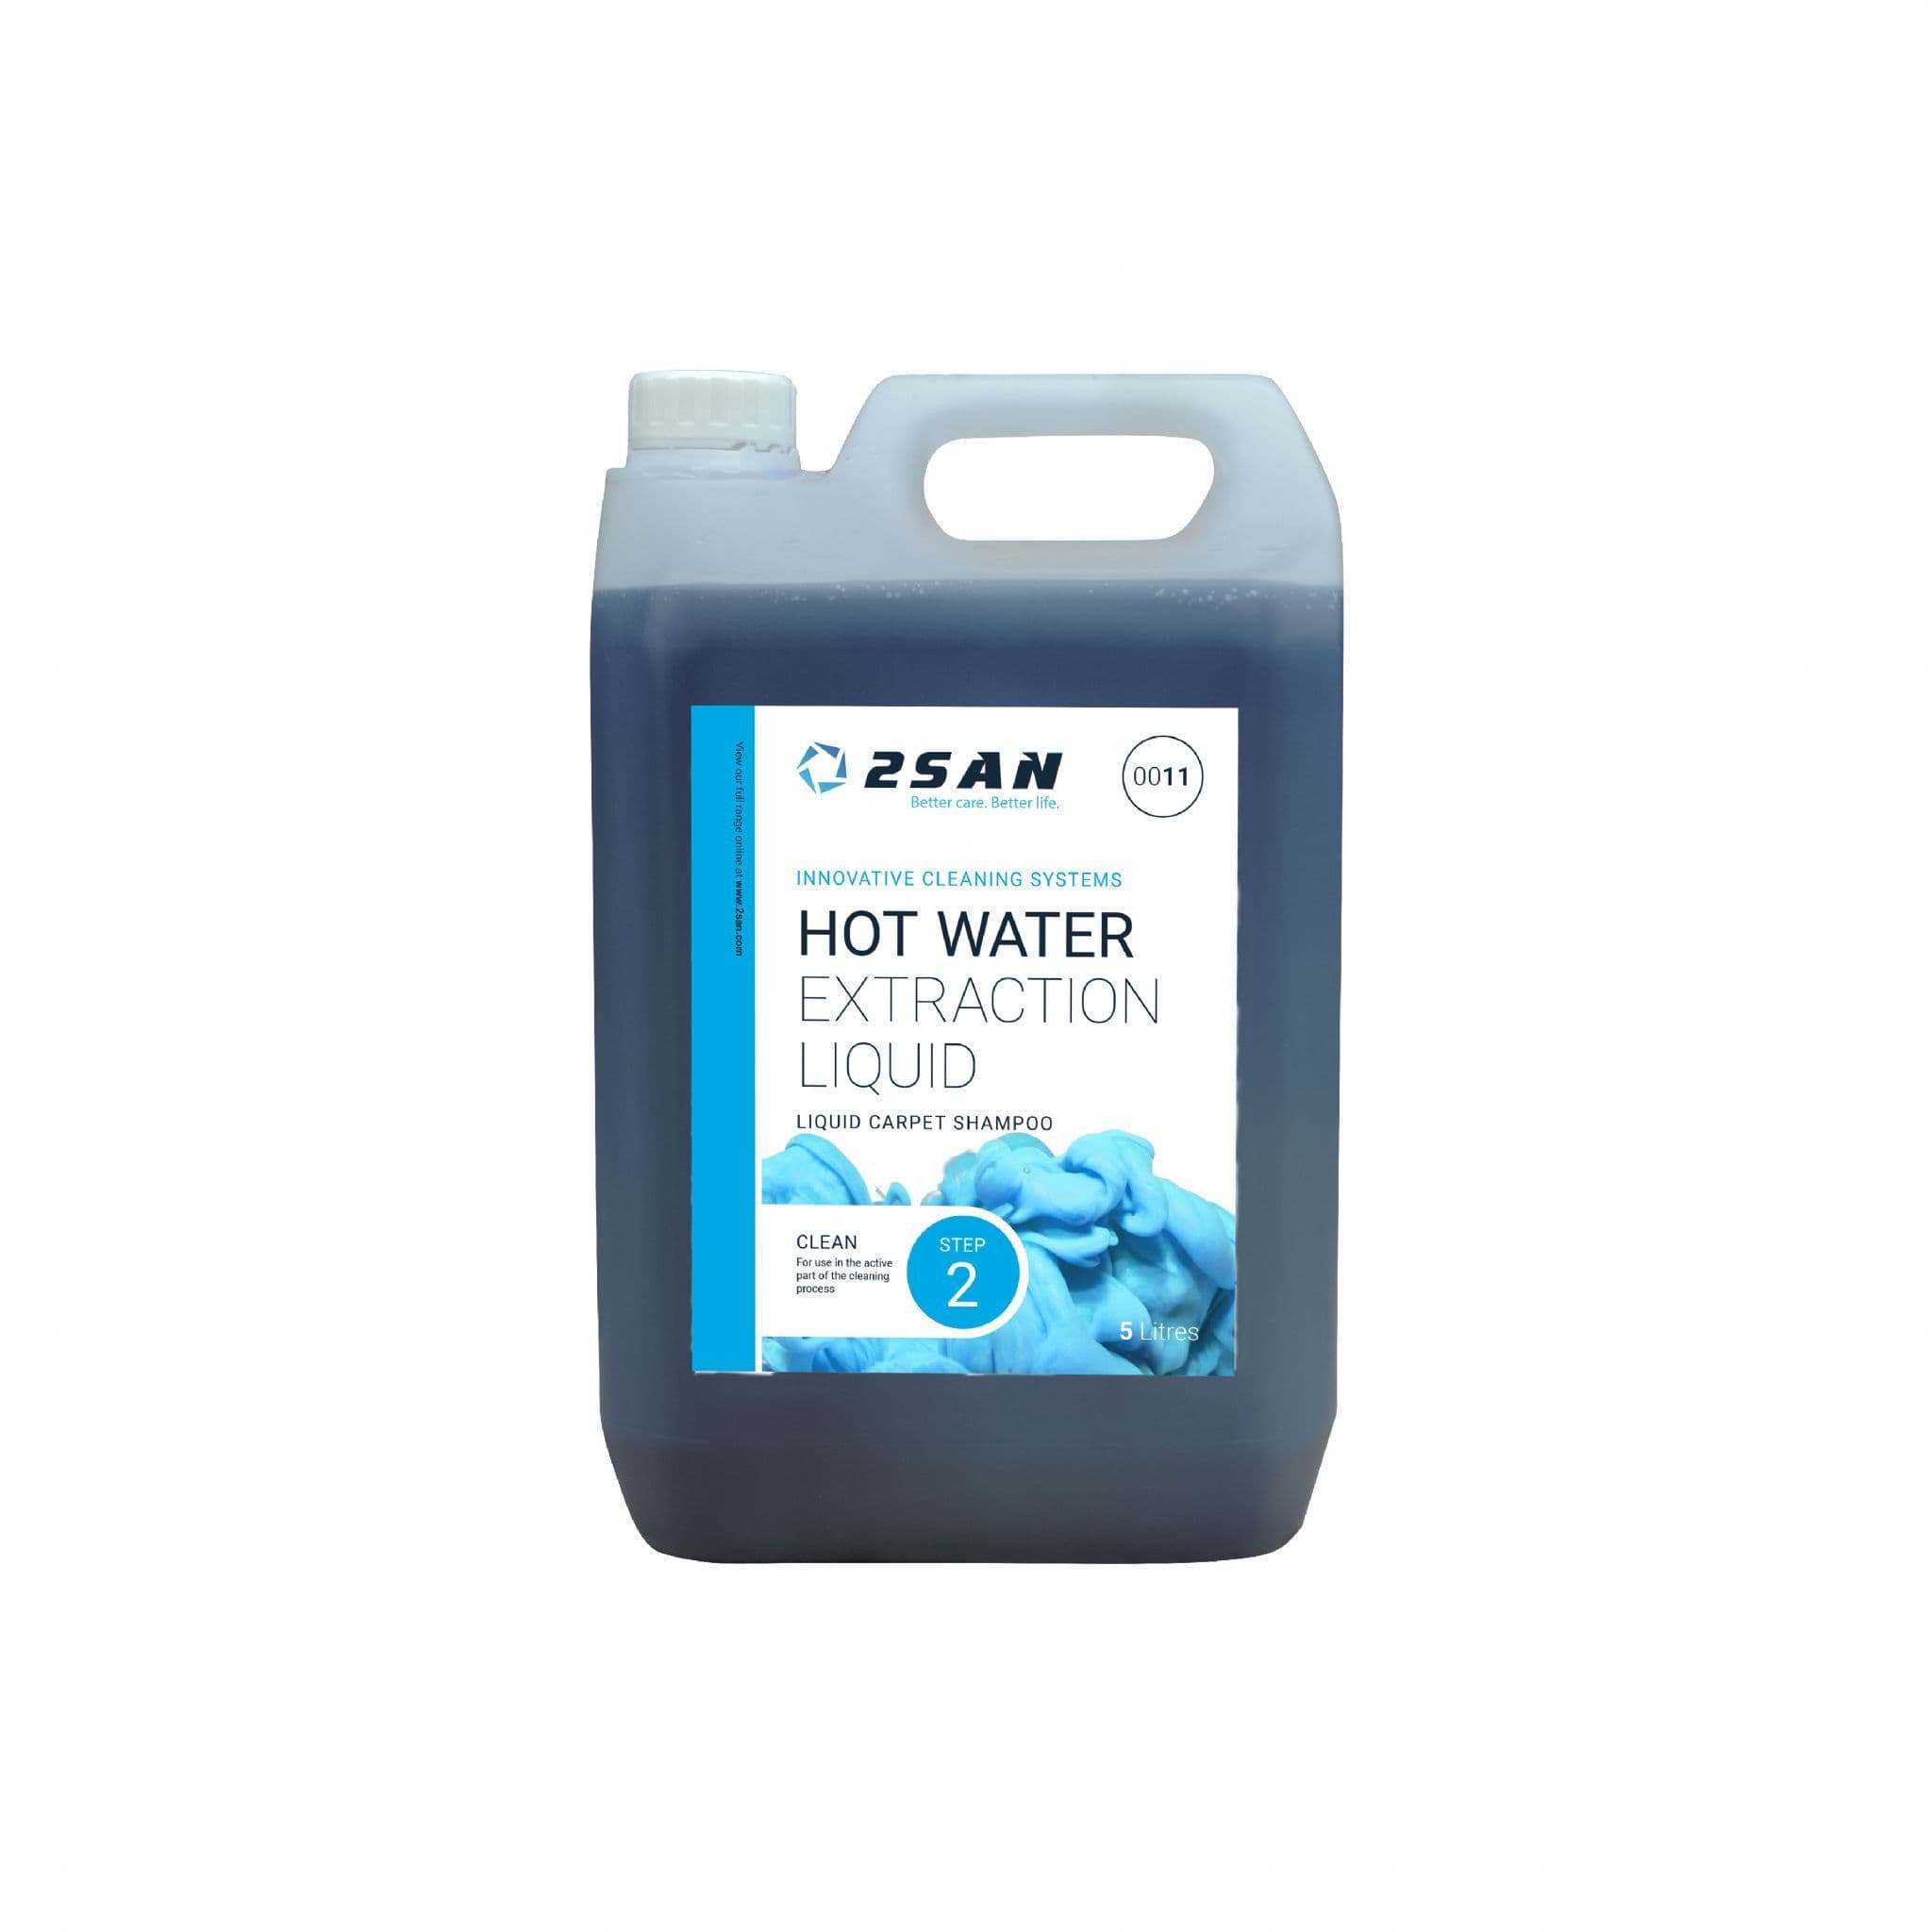 2SAN(Craftex) Hot Water Extraction Liquid 5L 0011